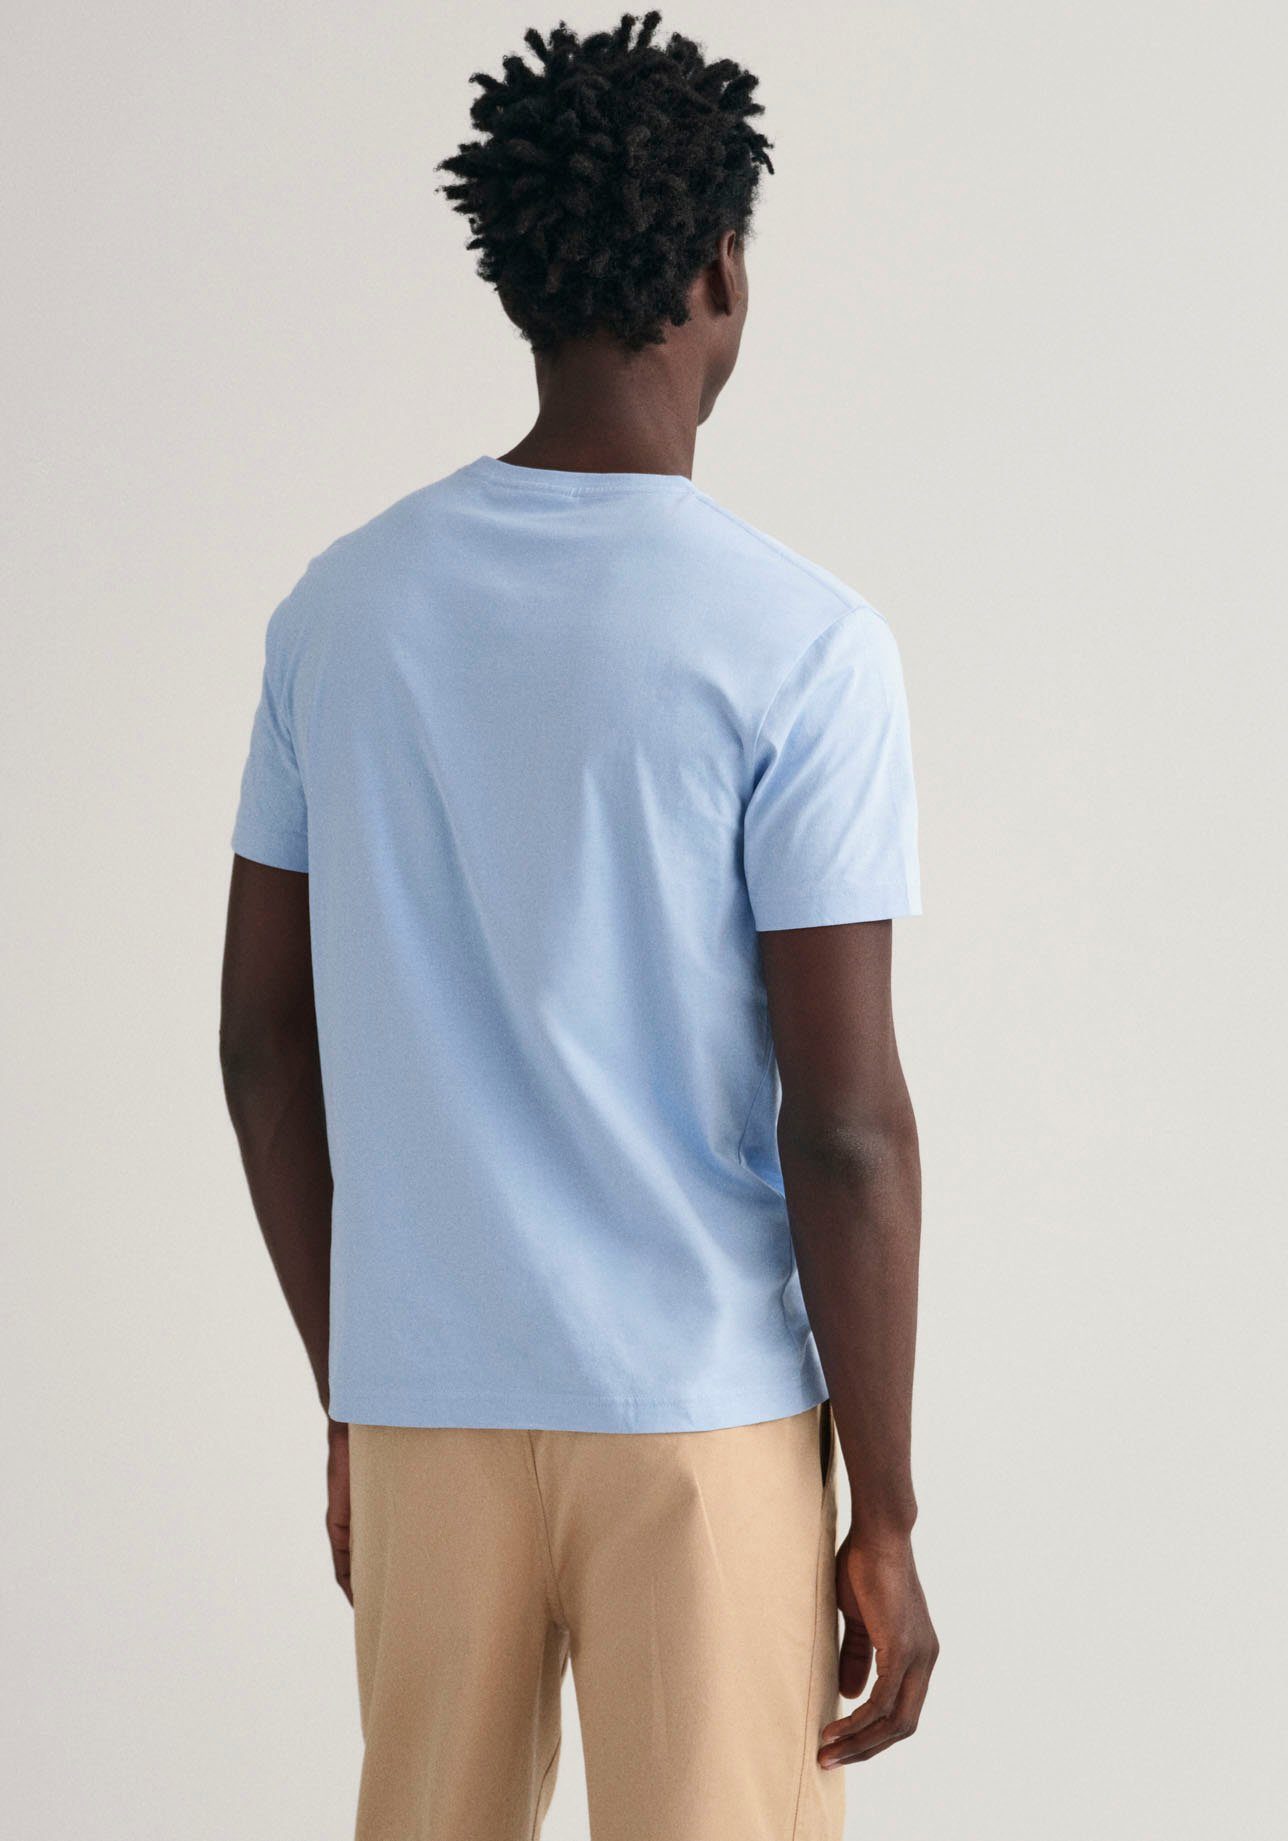 T-Shirt Gant blue auf Brust T-SHIRT mit SS REG SHIELD Logostickerei der capri